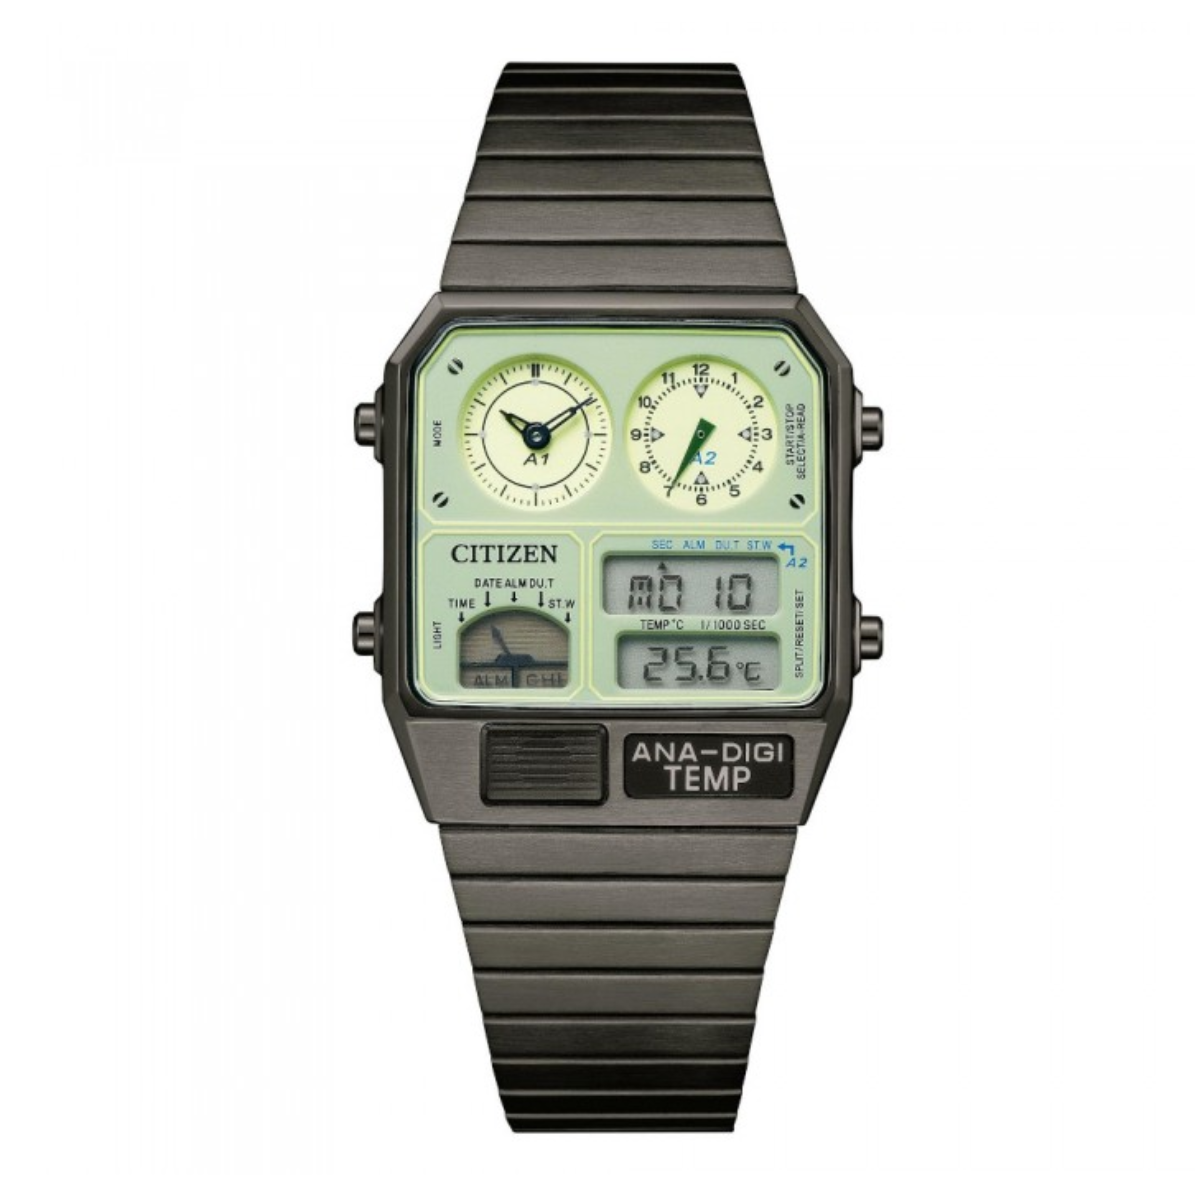 Citizen JG2147-85 JG2147-85X Analog Digital Temp Chronograph Watch